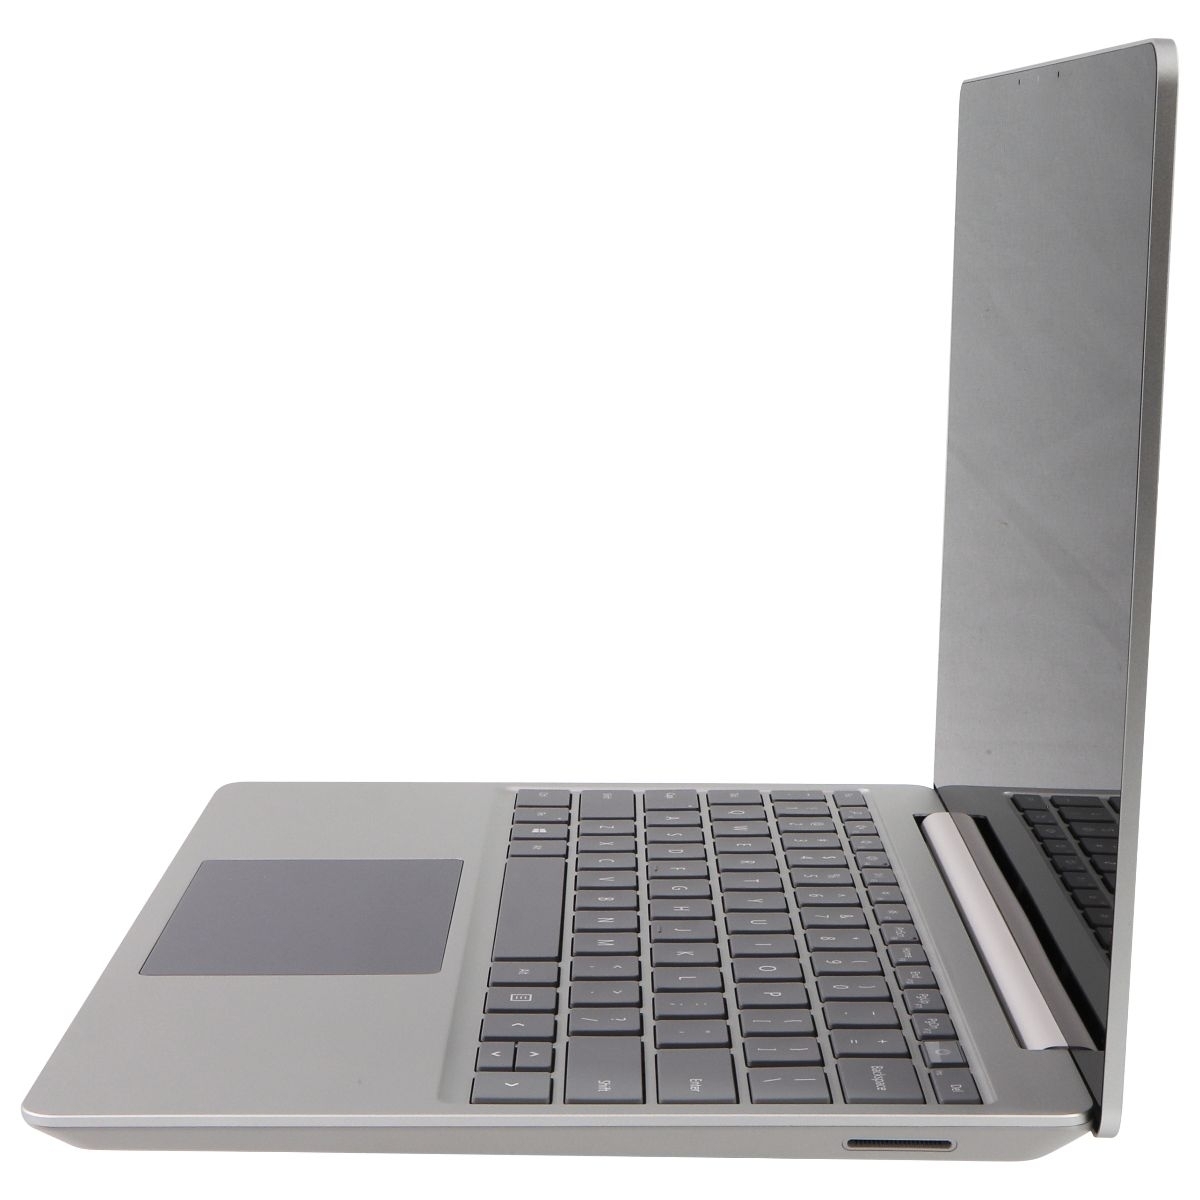 Microsoft Surface Laptop Go (12.4-in) 1943 (i5-1035G1 / 256GB / 8GB) - Platinum